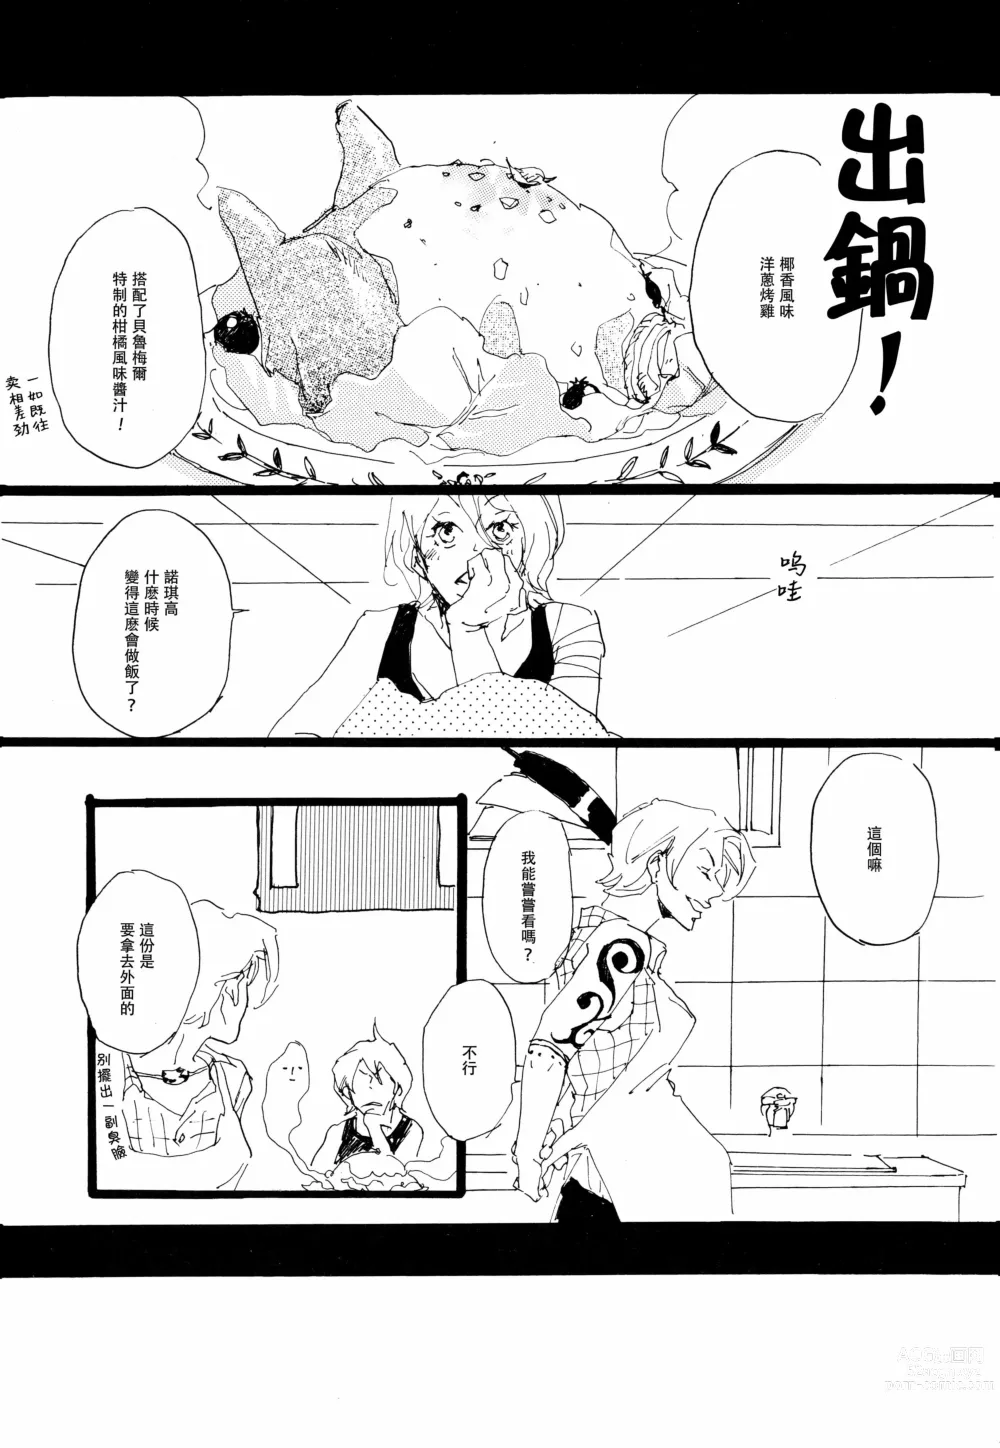 Page 6 of doujinshi Aquakiara